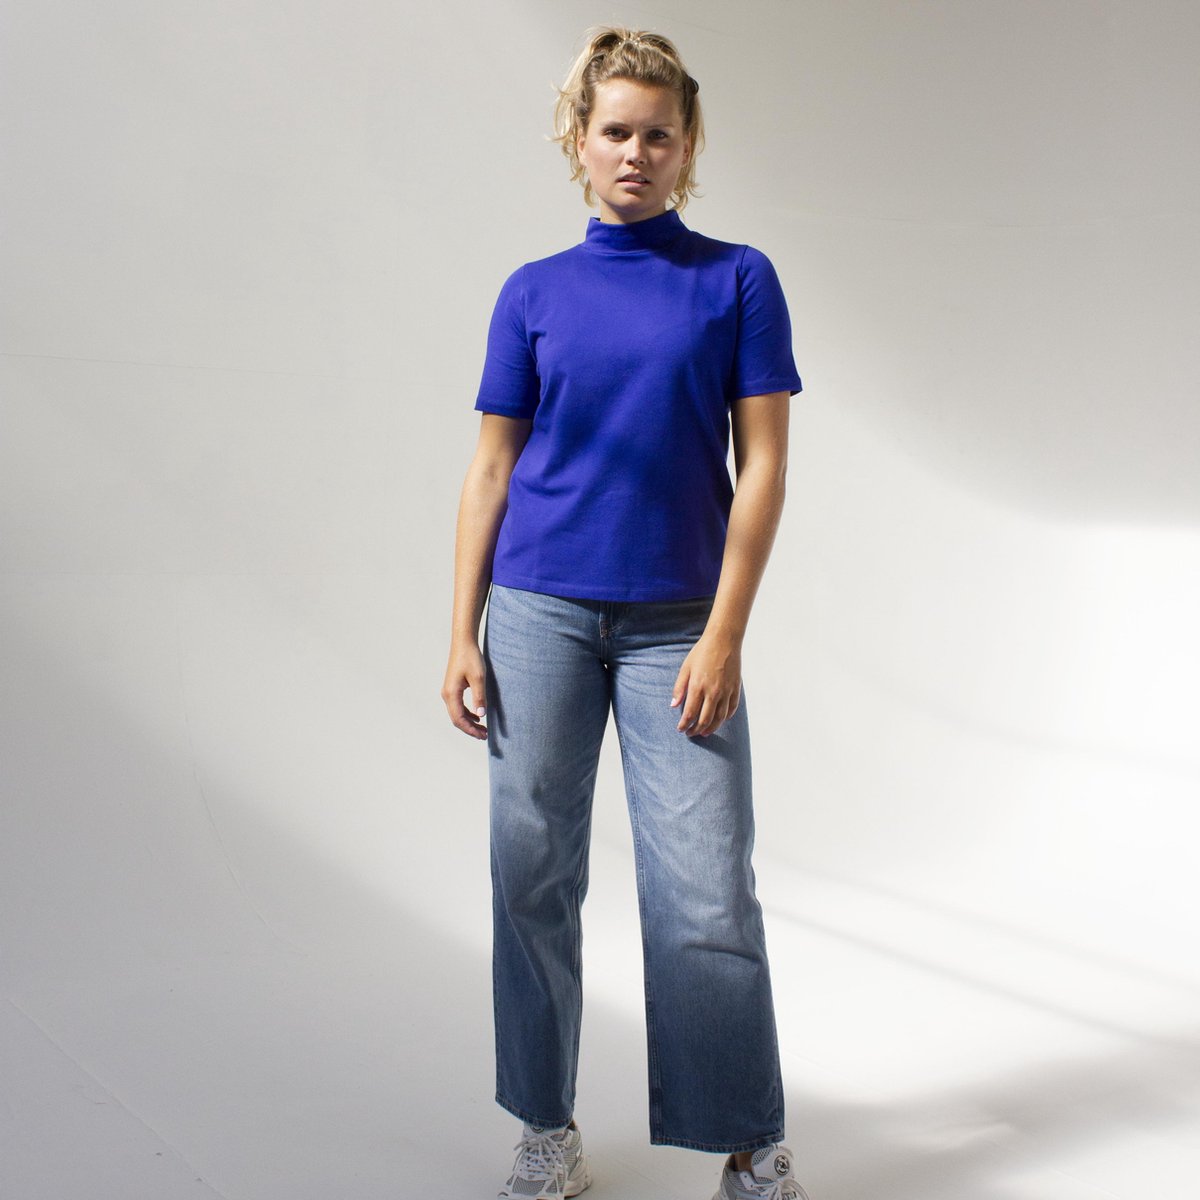 MOOI! Company - Dames T-shirt - MAARTJE - Turtleneck - Losse pasvorm - kleur Queen Blue- S